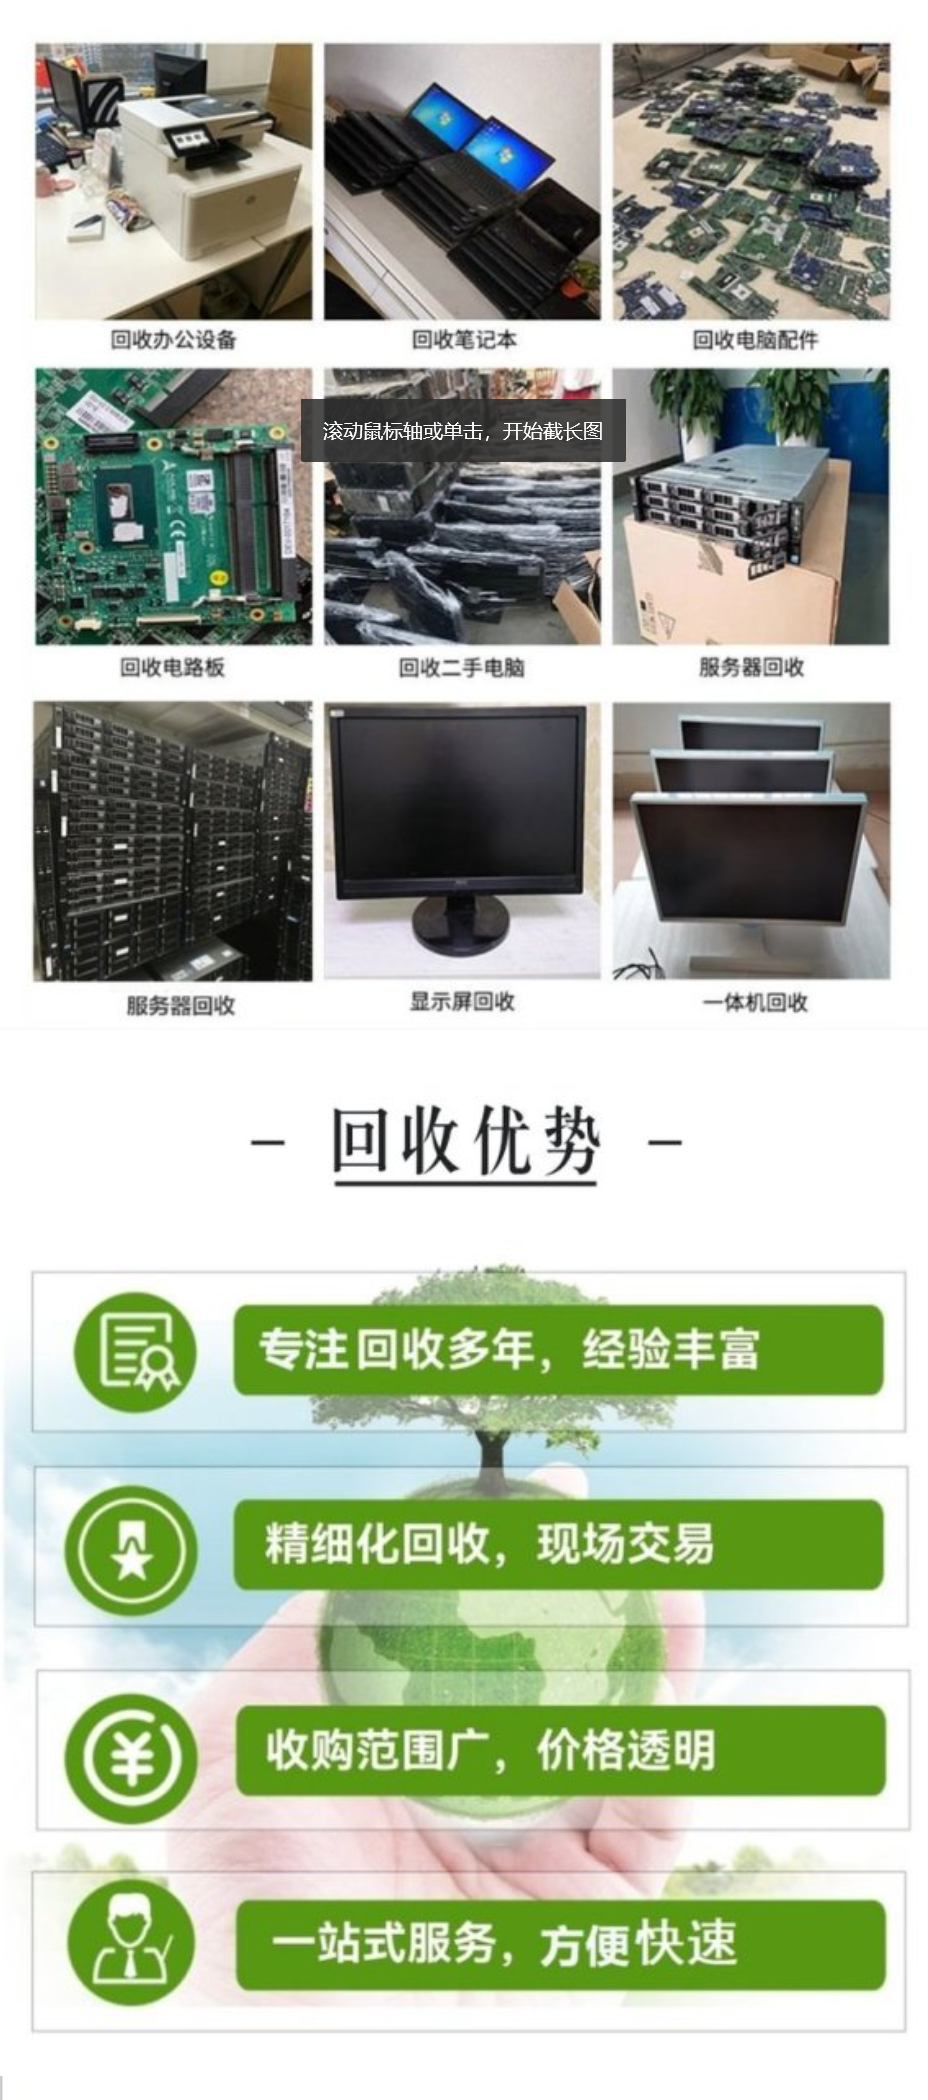 Laptop screen recycling, damaged laptop, high price door-to-door collection, desktop computer scrapping and disposal